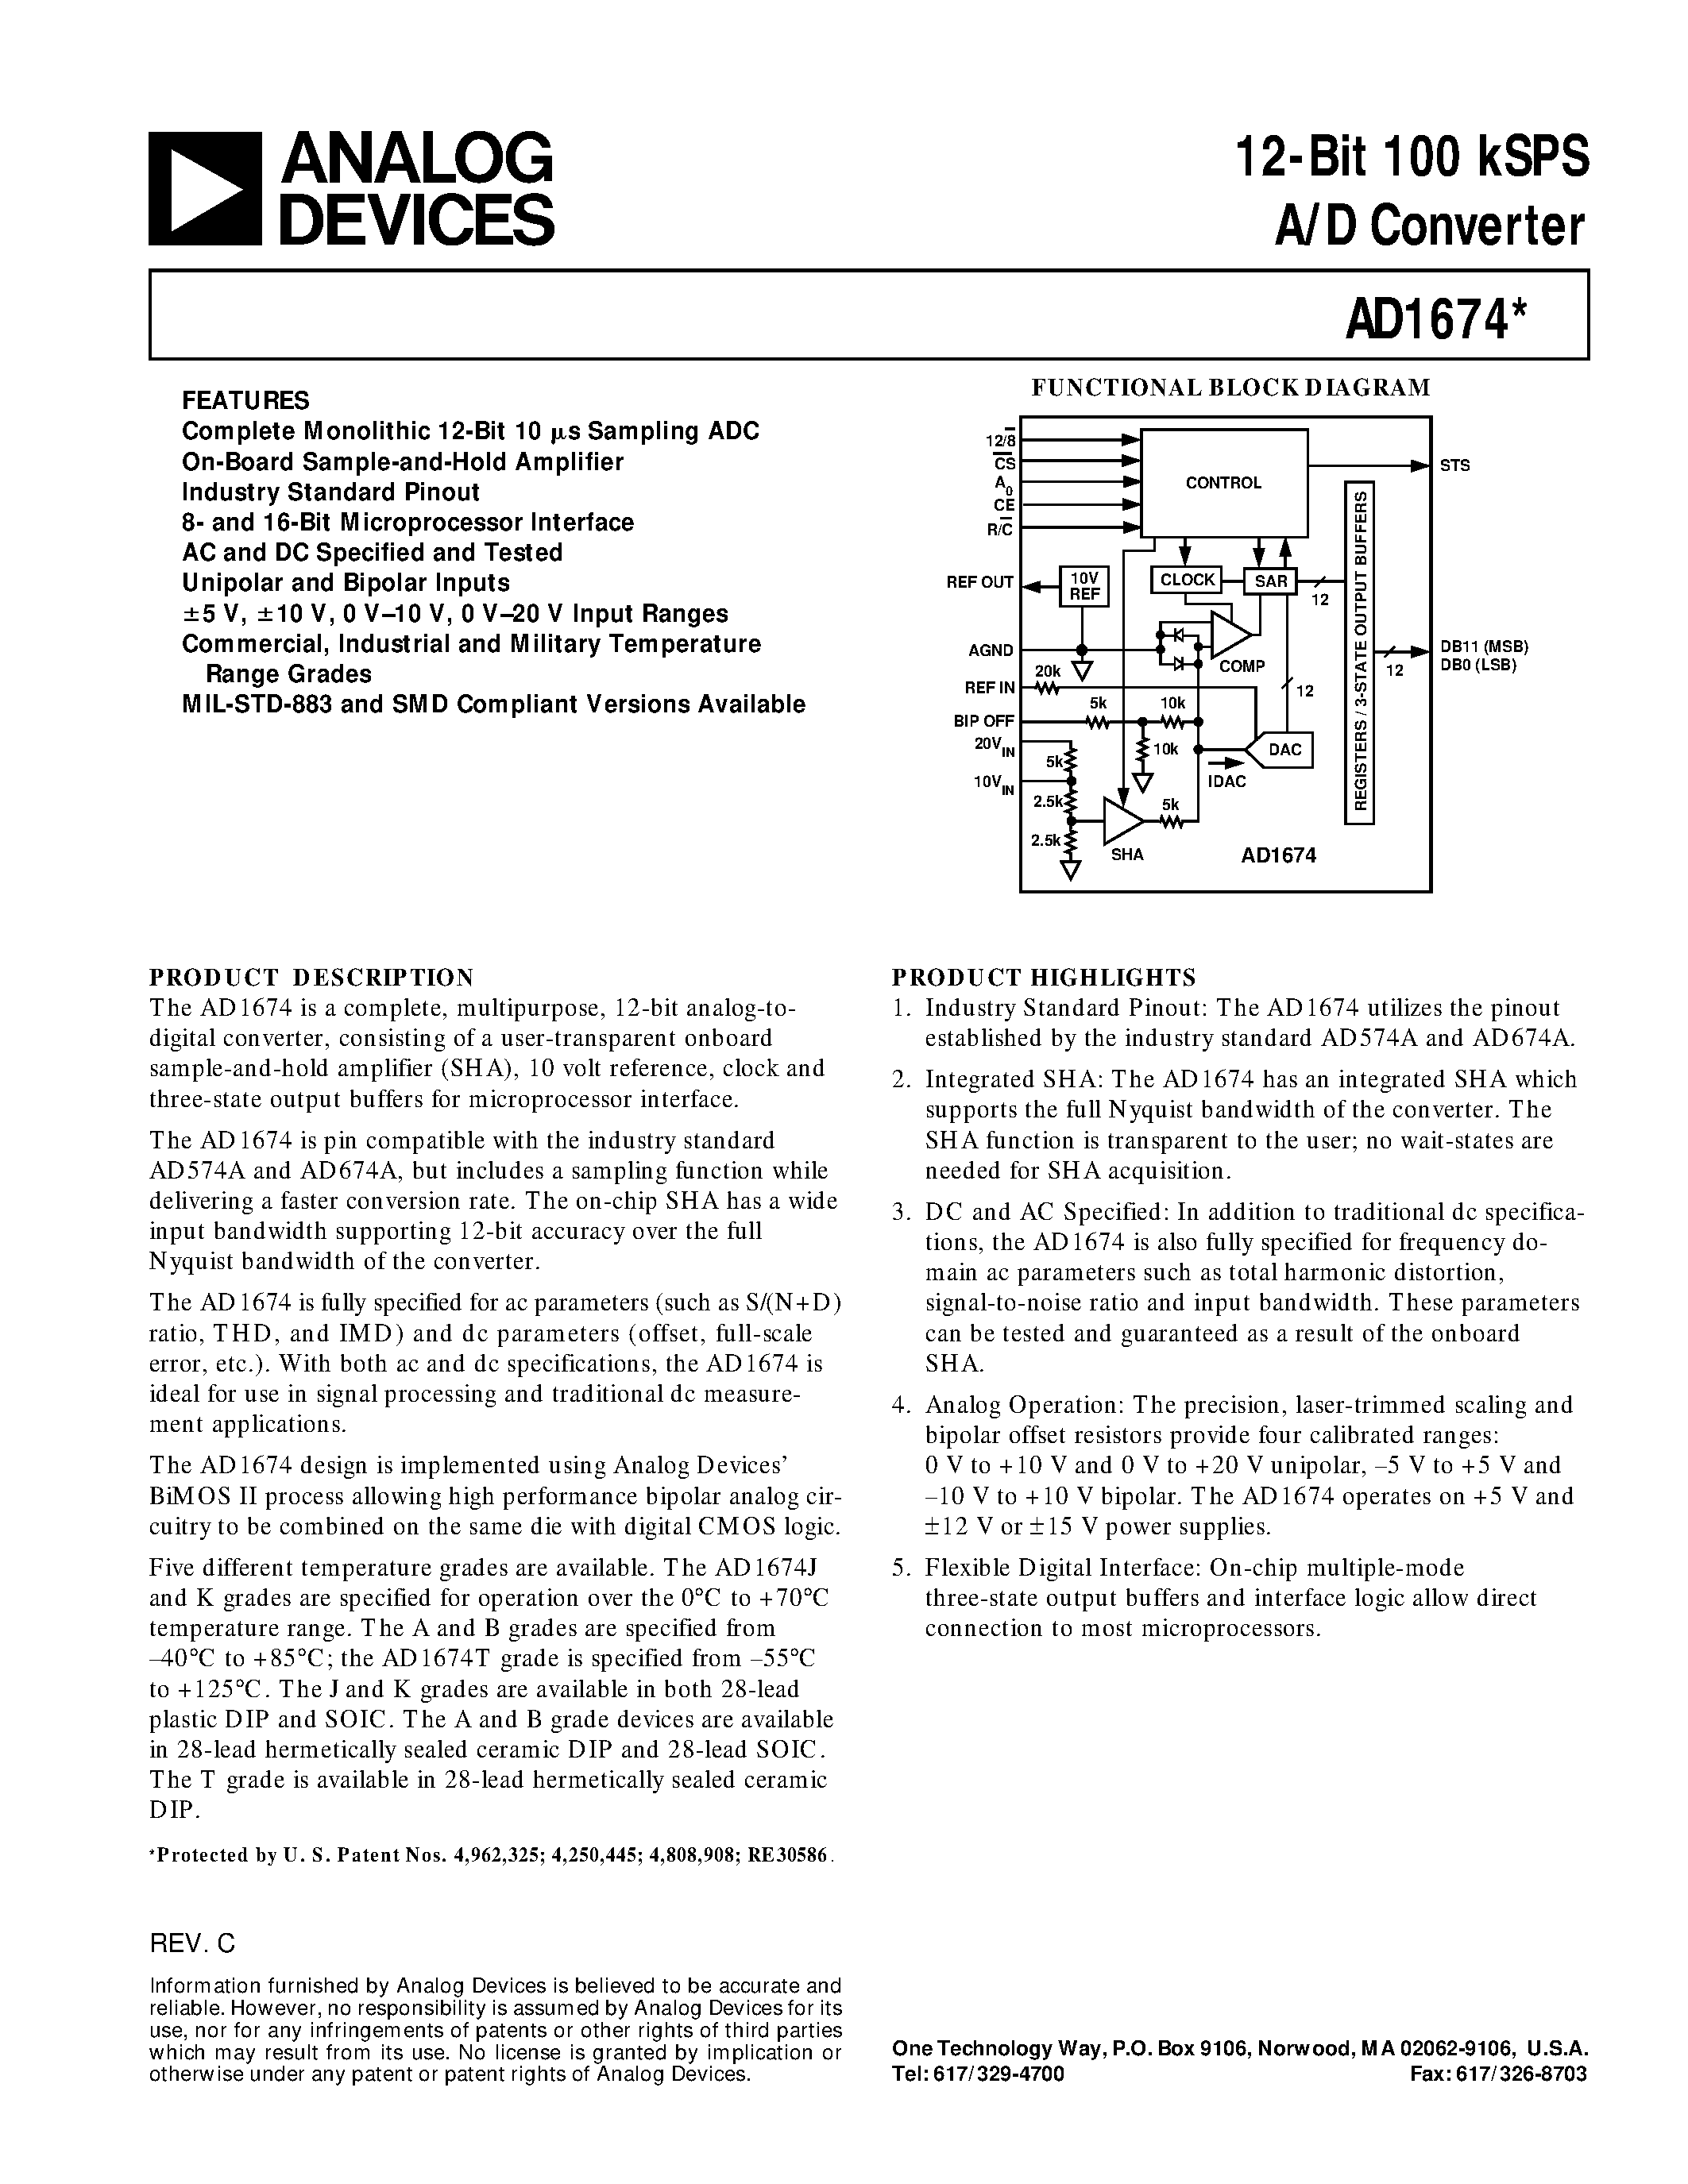 Datasheet AD1674AD - 12-Bit 100 kSPS A/D Converter page 1